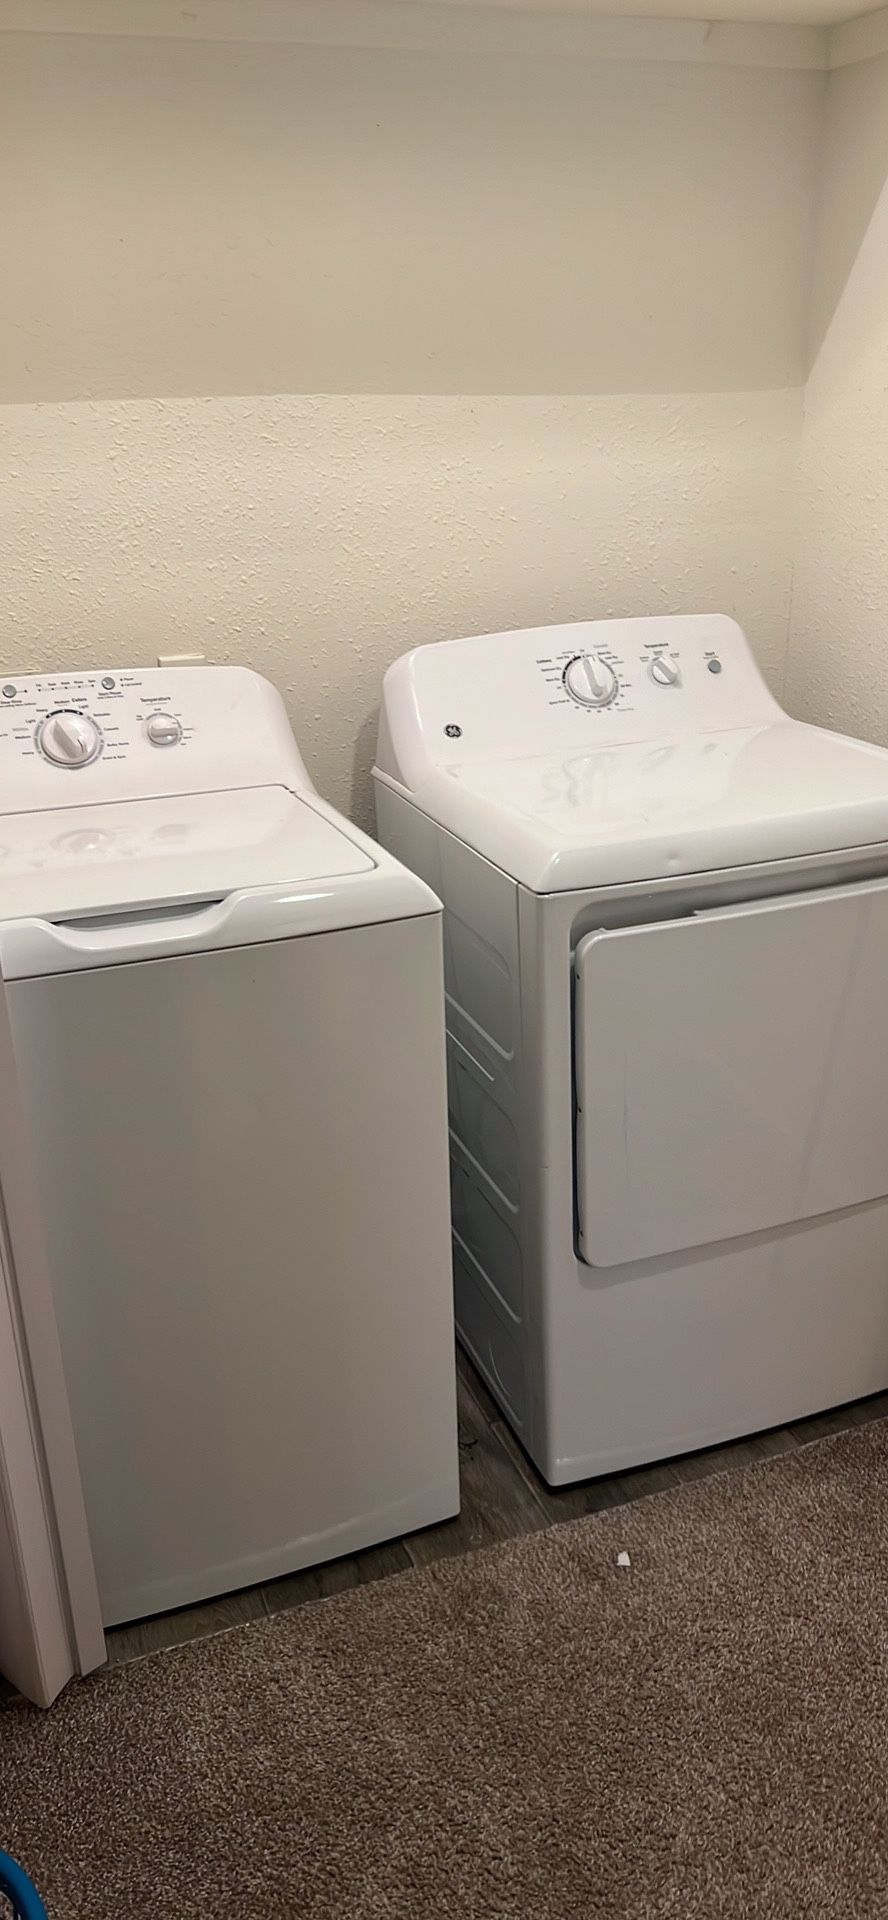 All in white washing dryer set